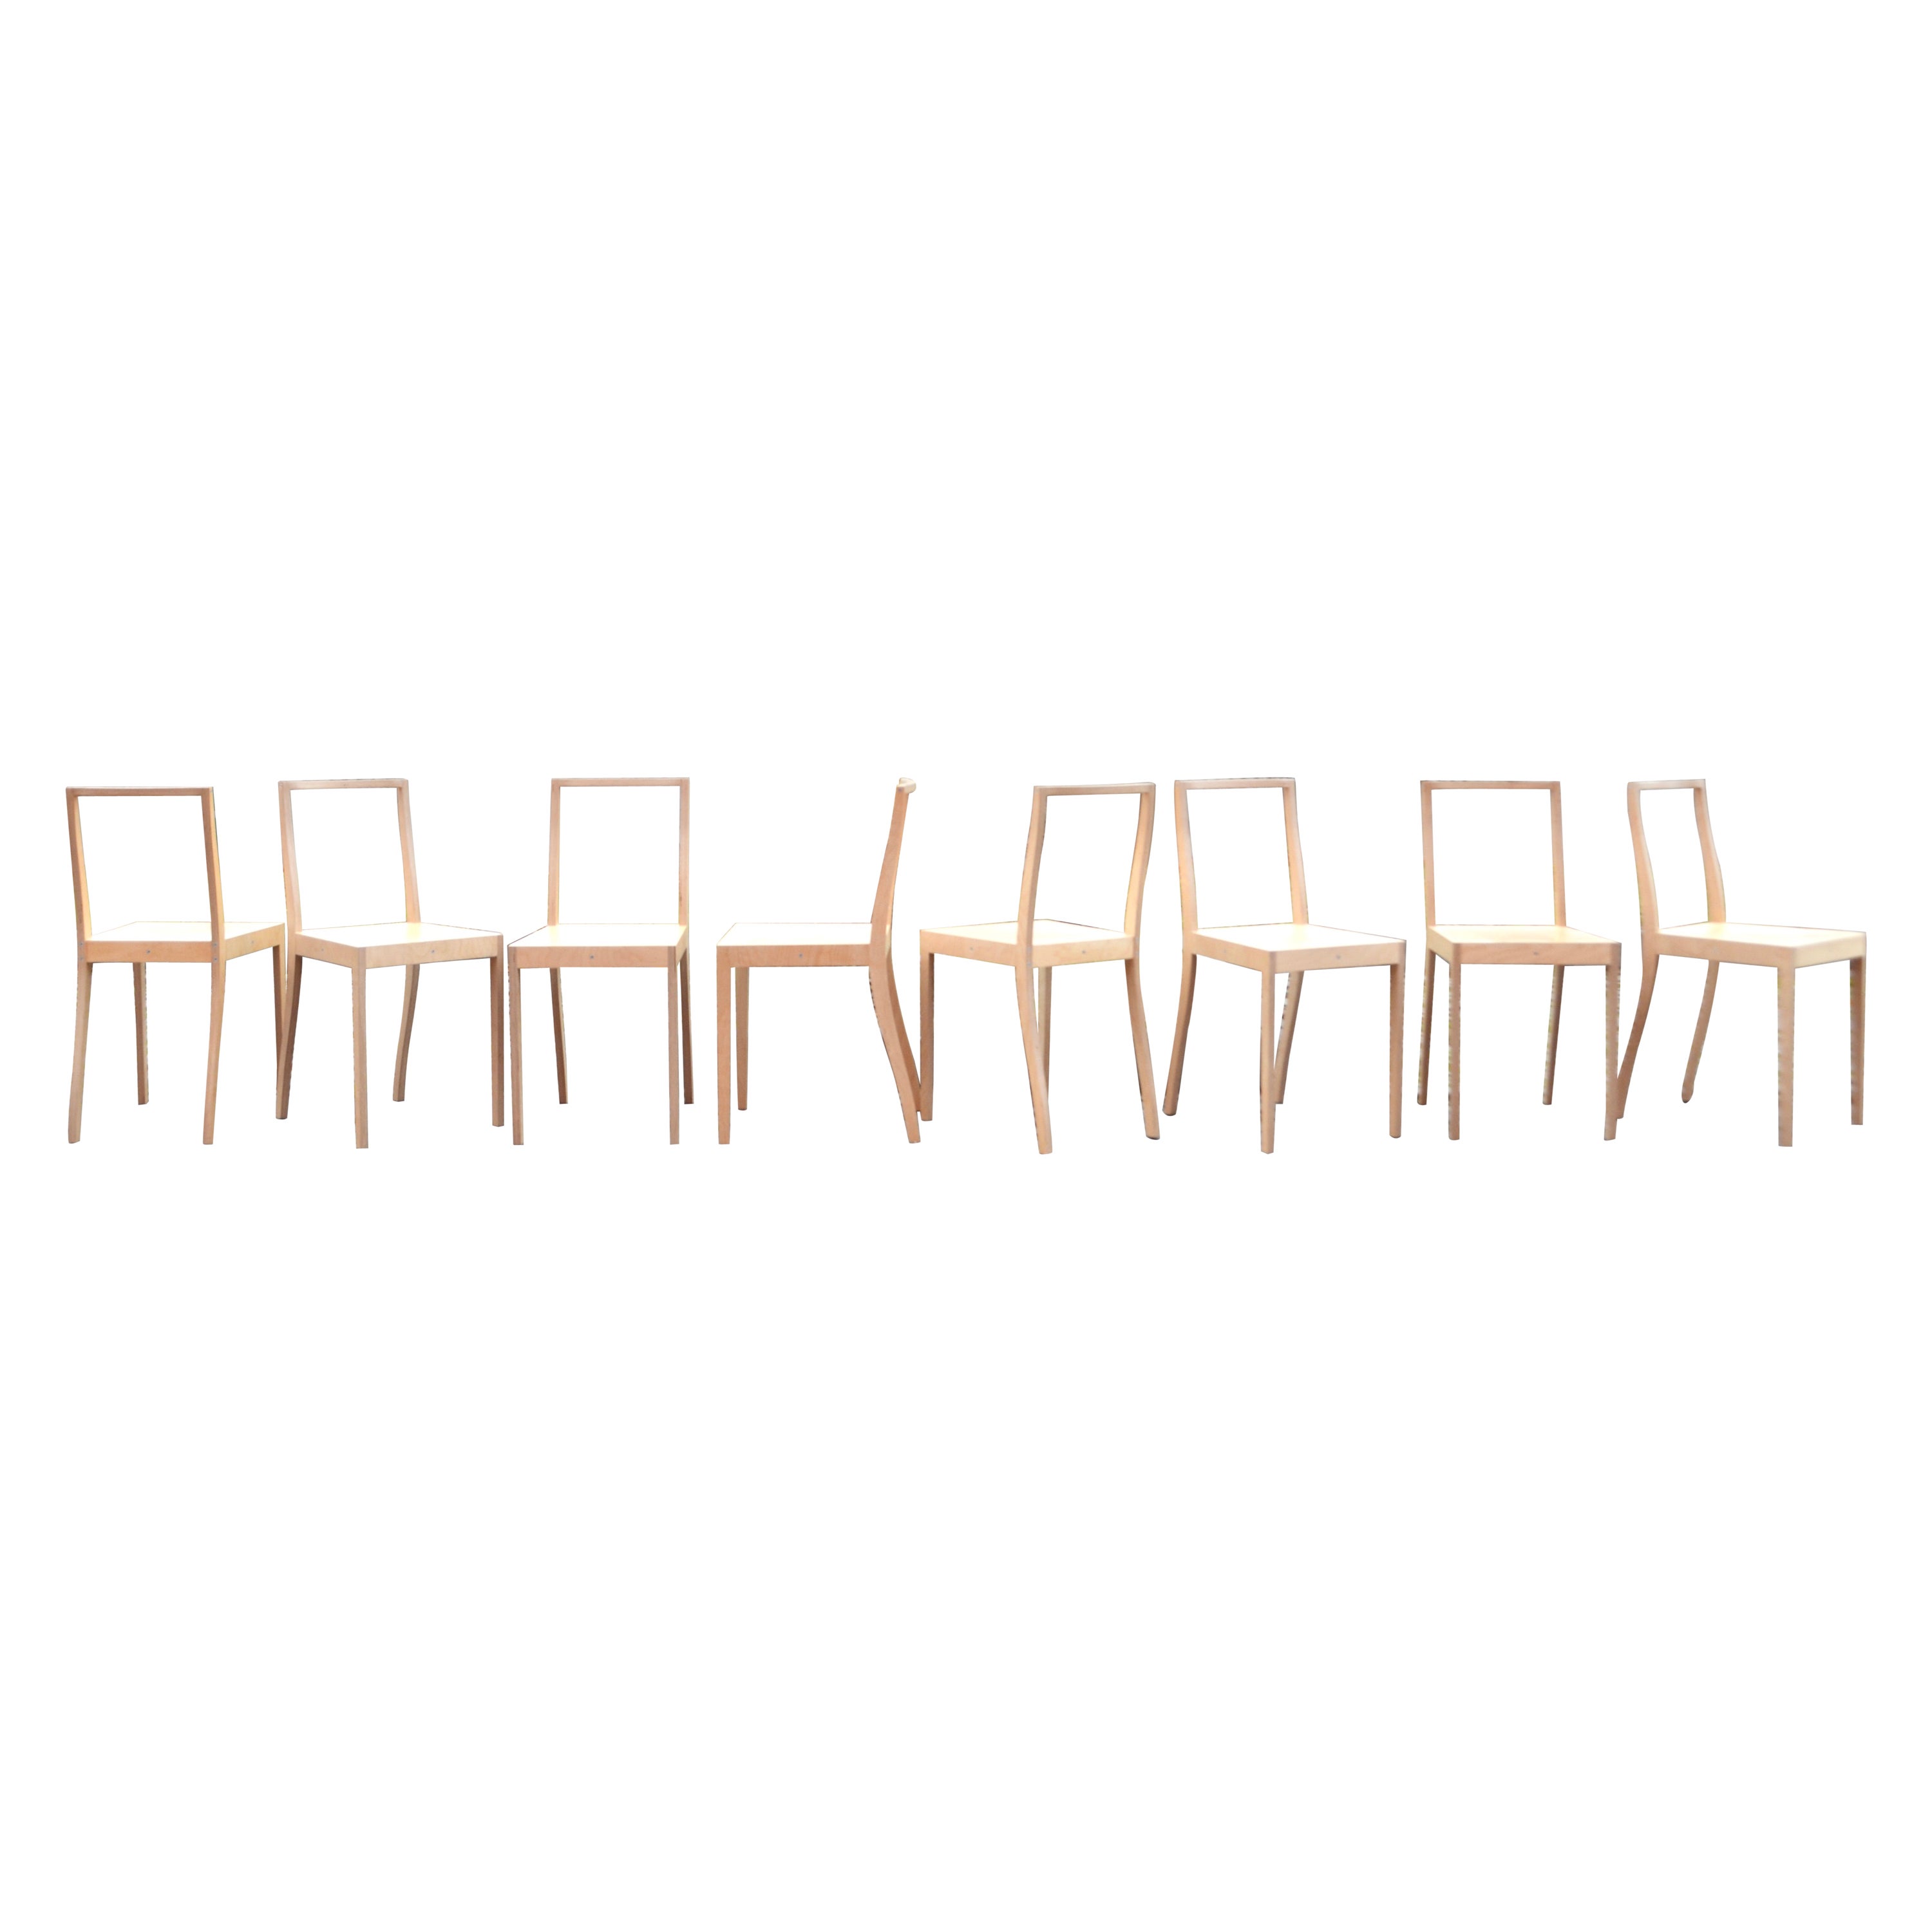 Jasper Morrison Sperrstuhl Sperrholz für Vitra Sperrholz-Set von 8 Stühlen